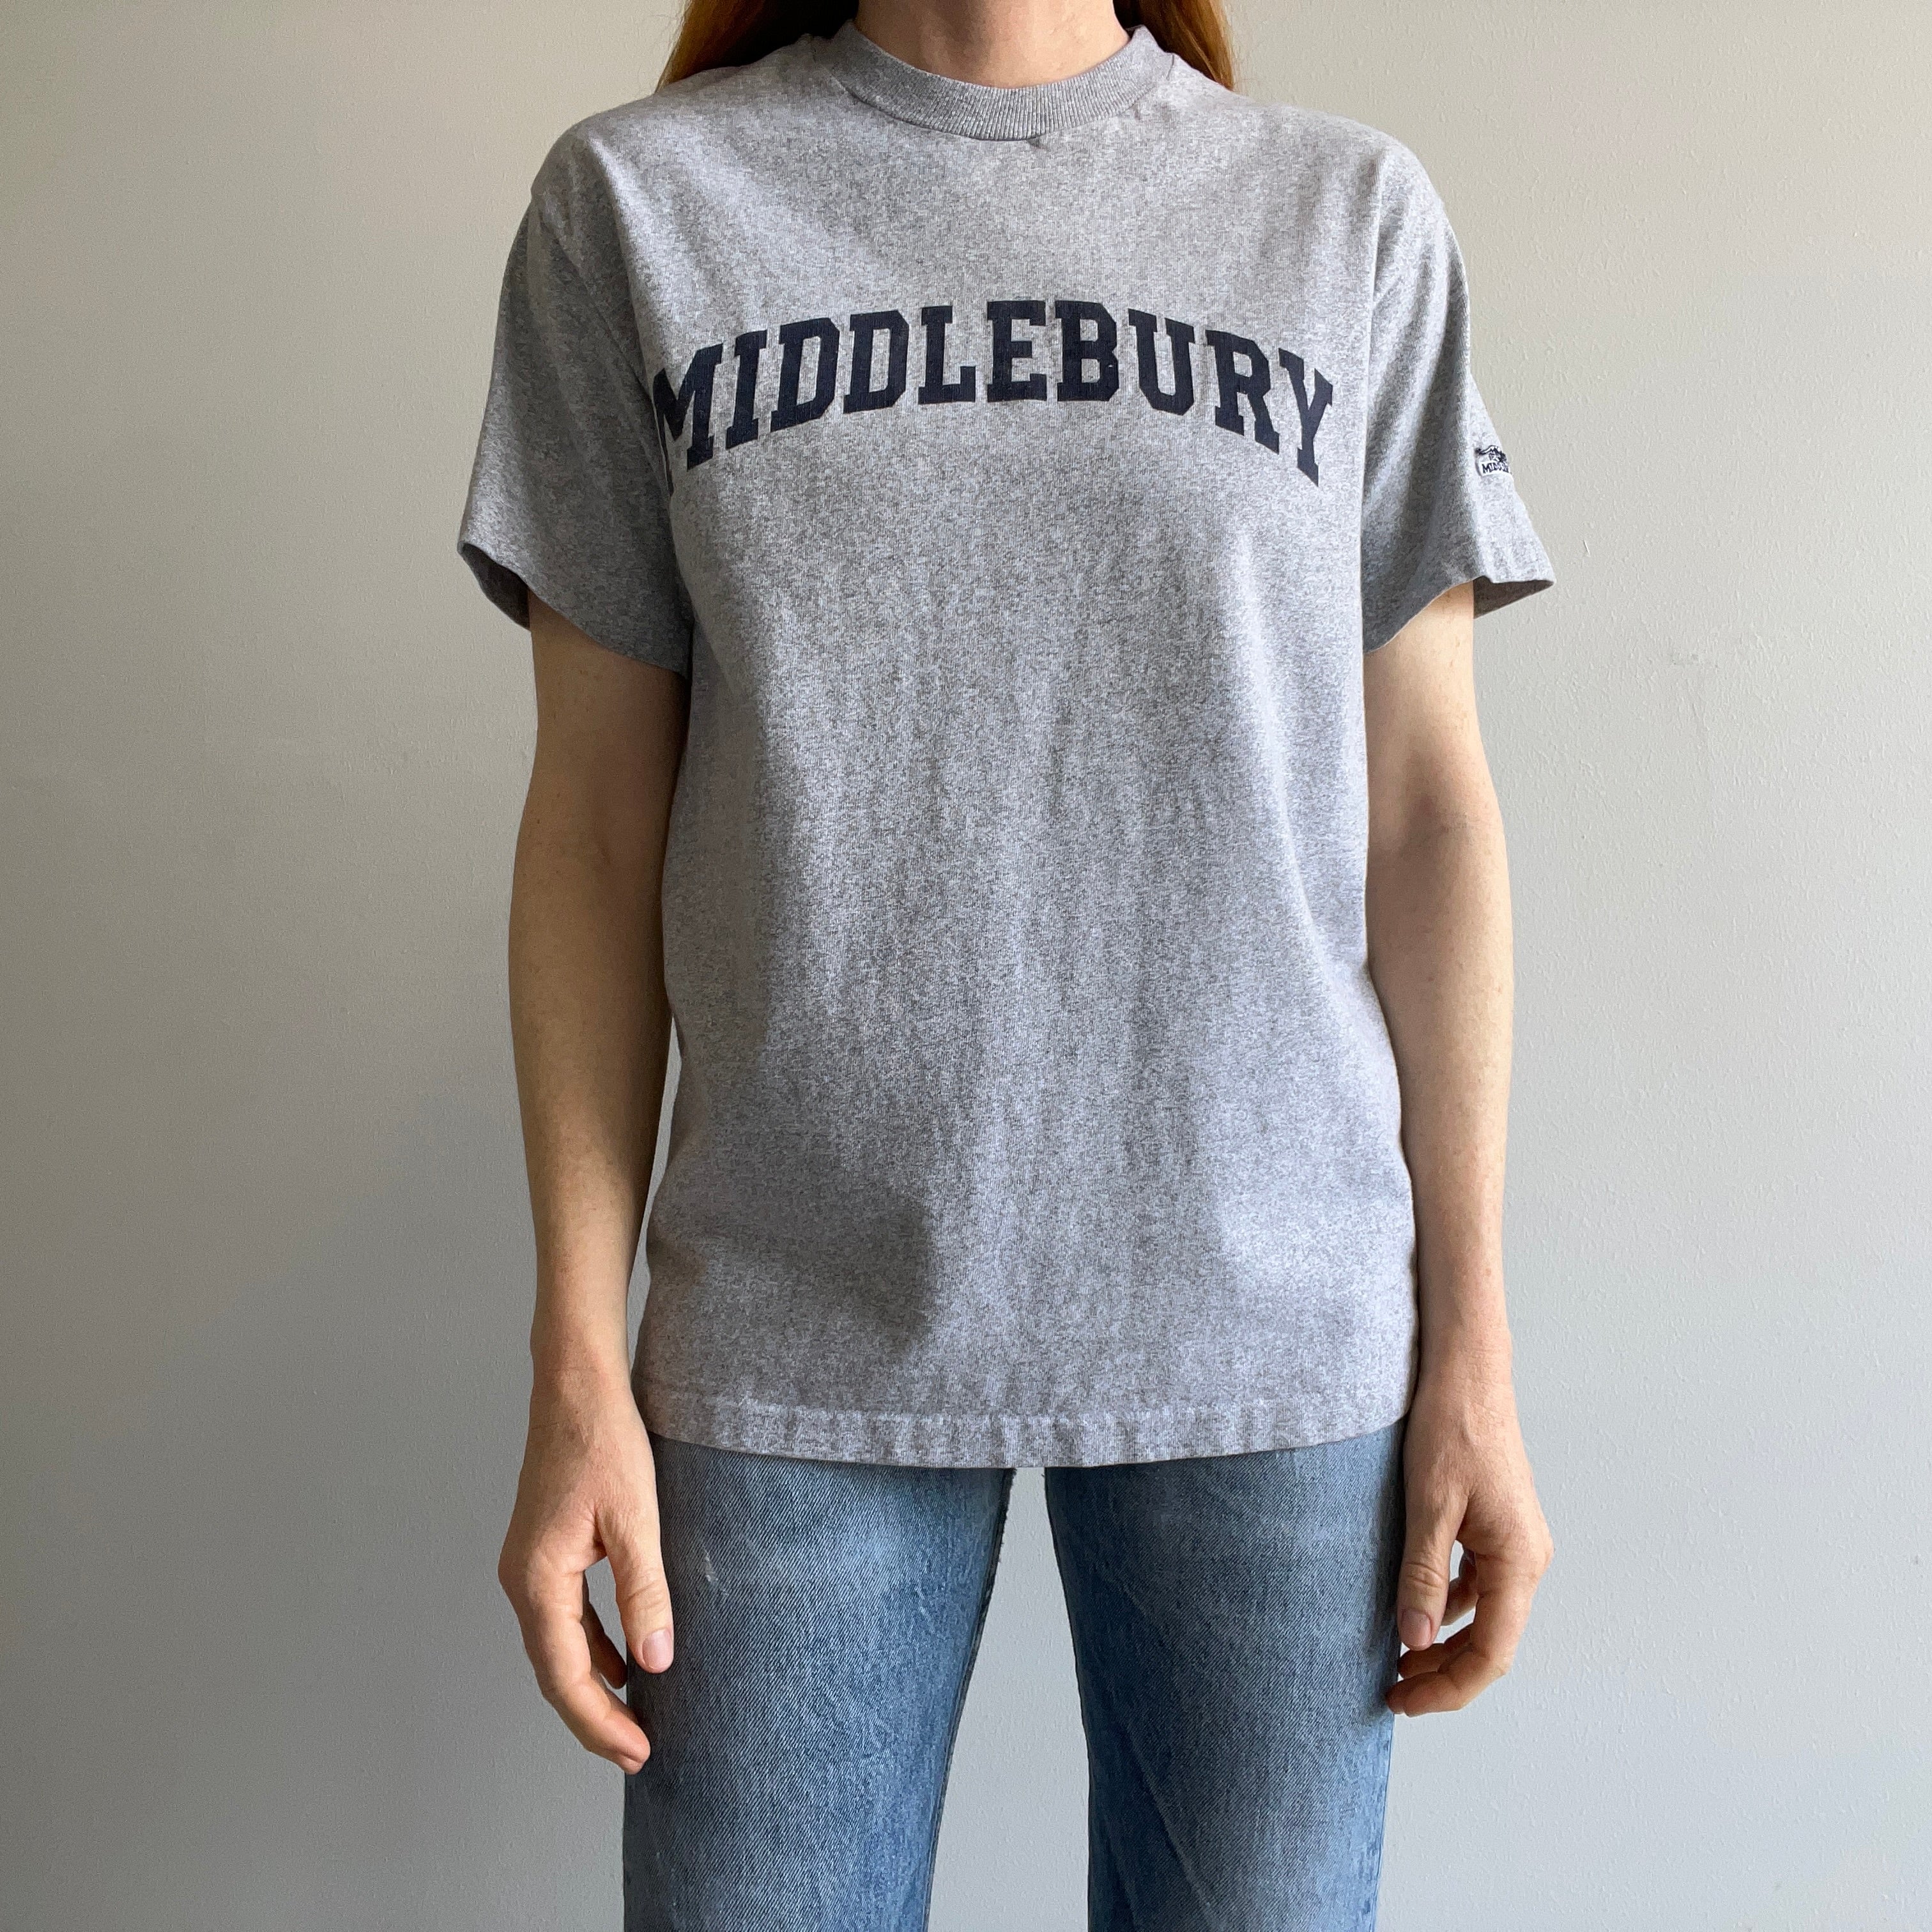 1990s Middlebury T-Shirt